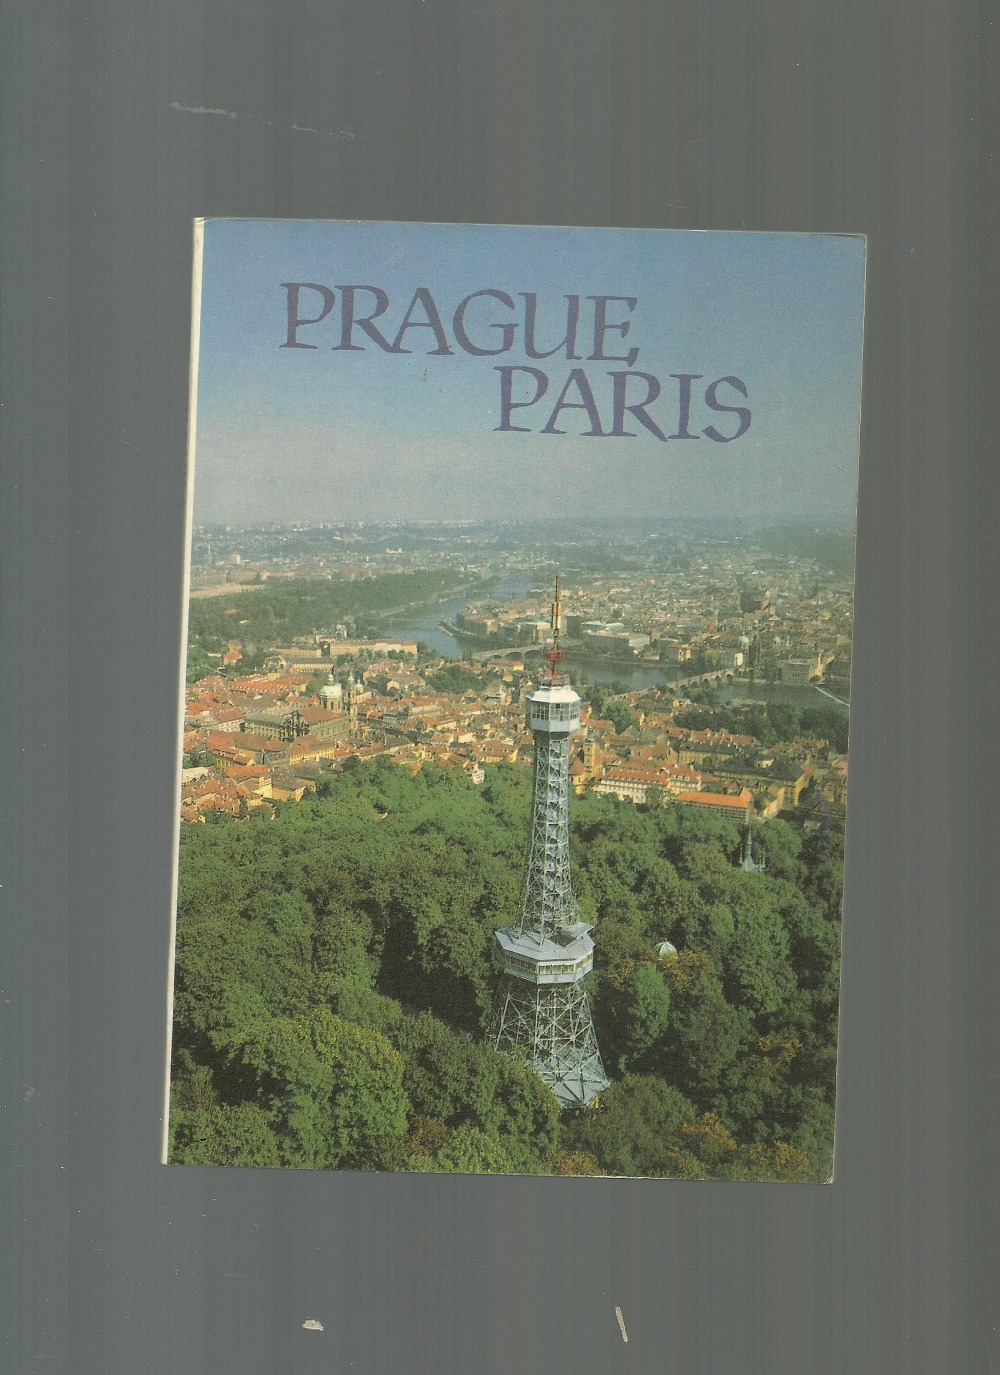 Prague - Paris